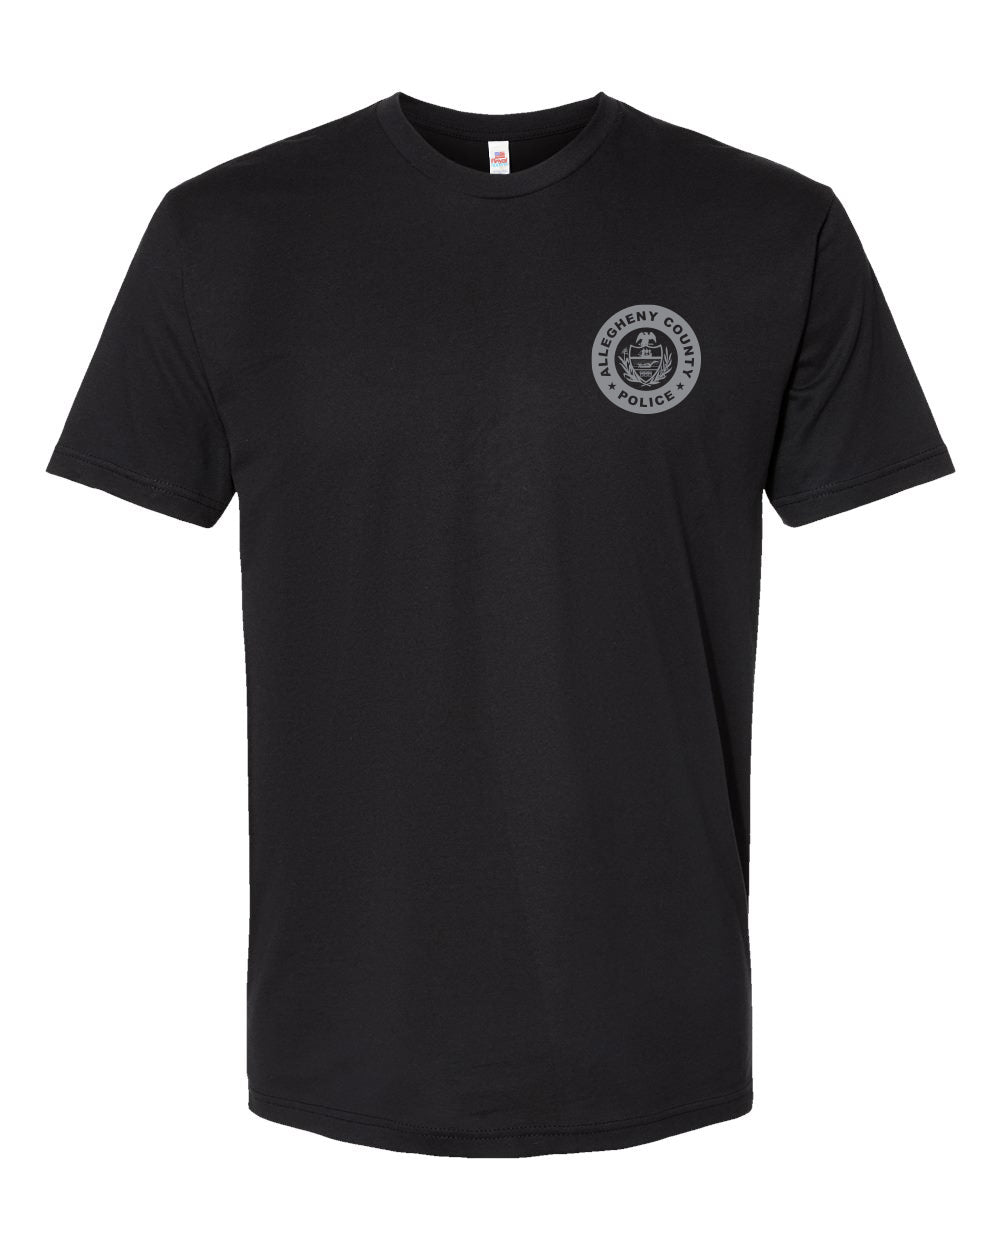 Allegheny County Police Association Black T-shirt